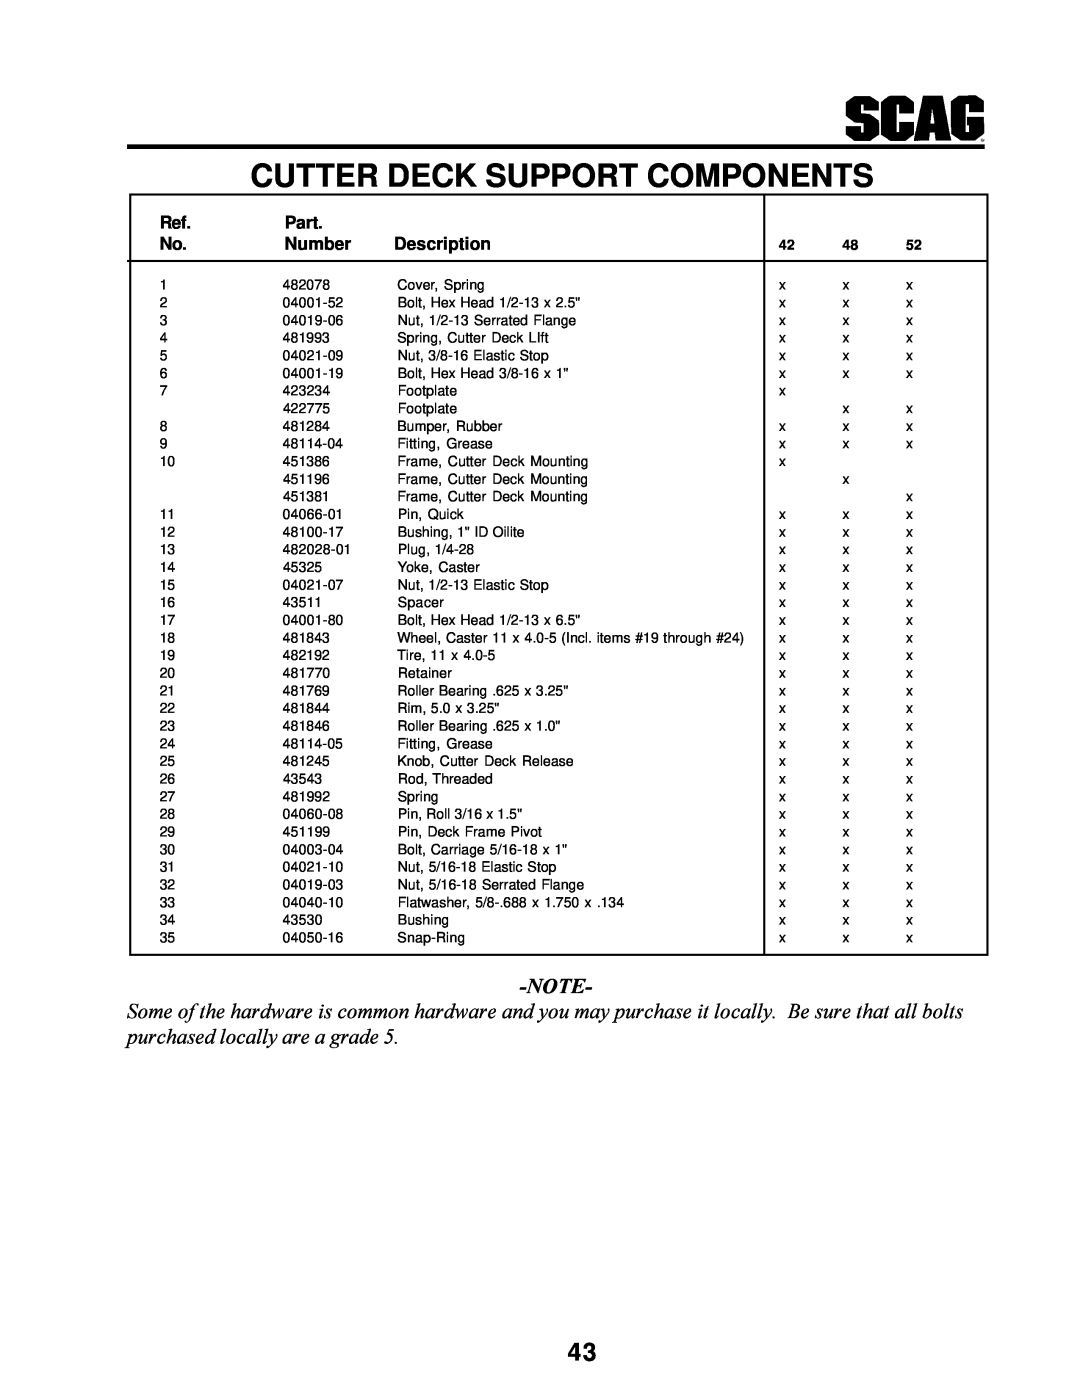 MB QUART SCR manual Cutter Deck Support Components, Part, Number, Description 